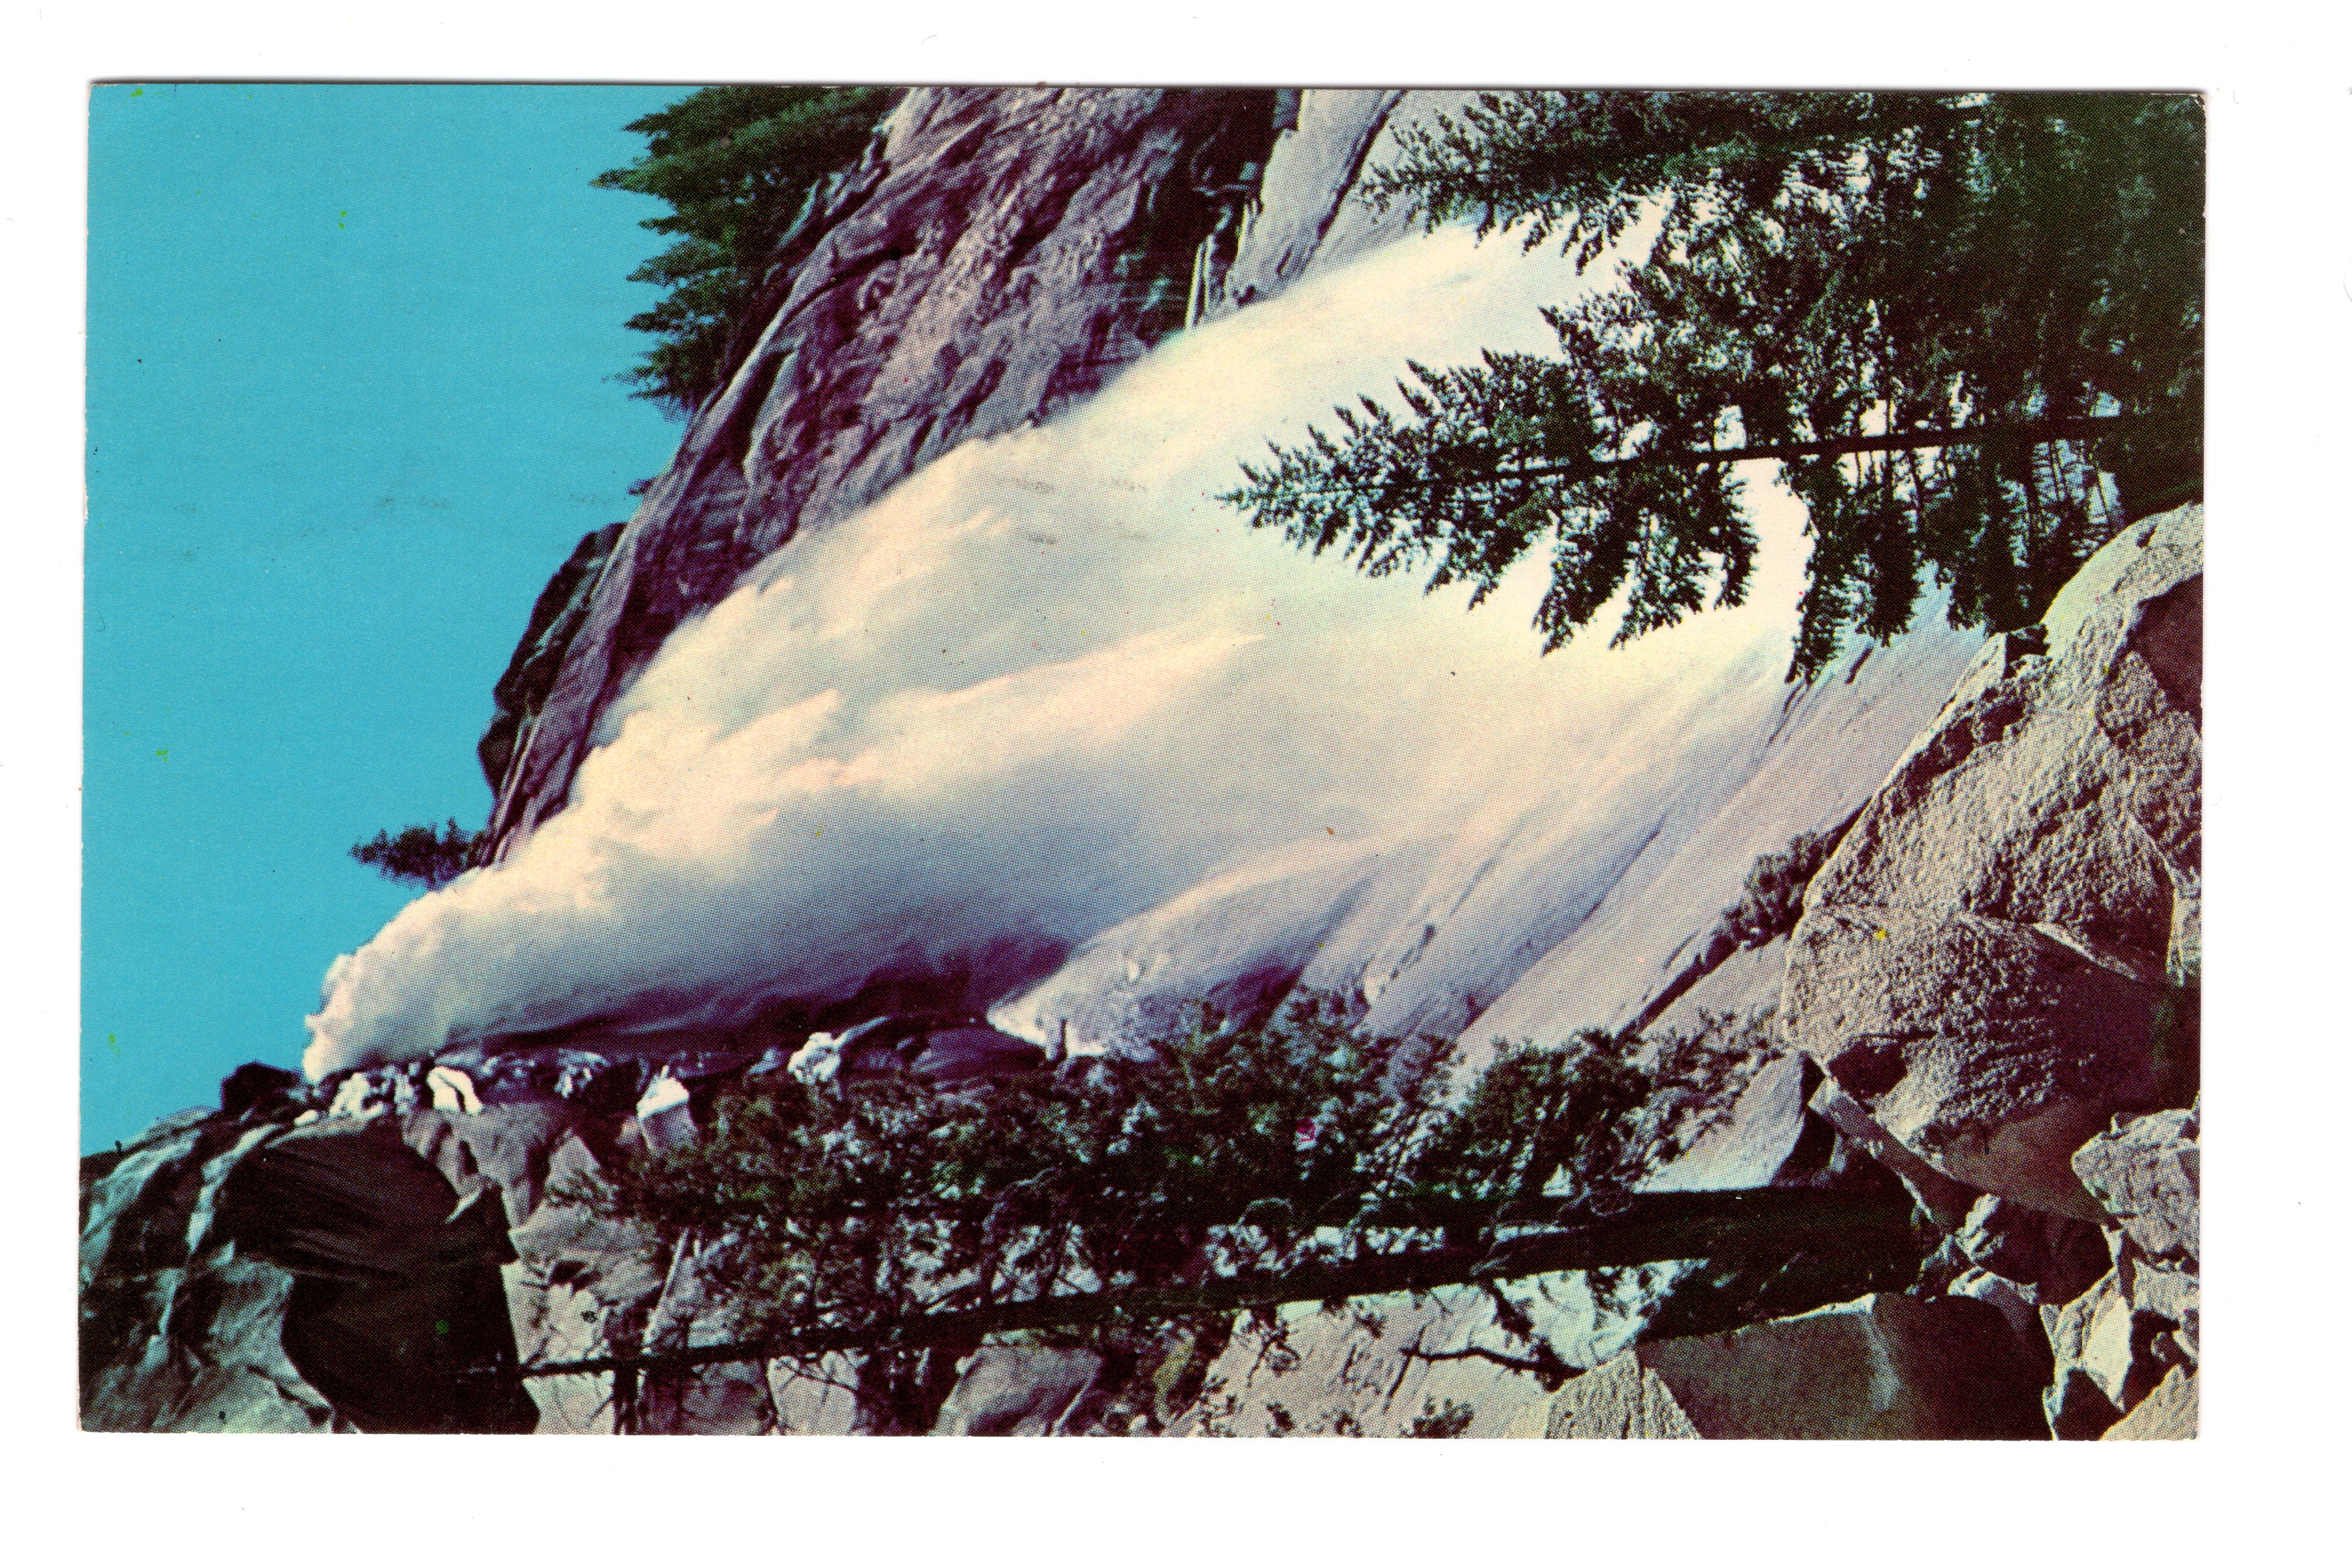 Yosemite National Park, Nevada Fall, California, Vintage Post Card.